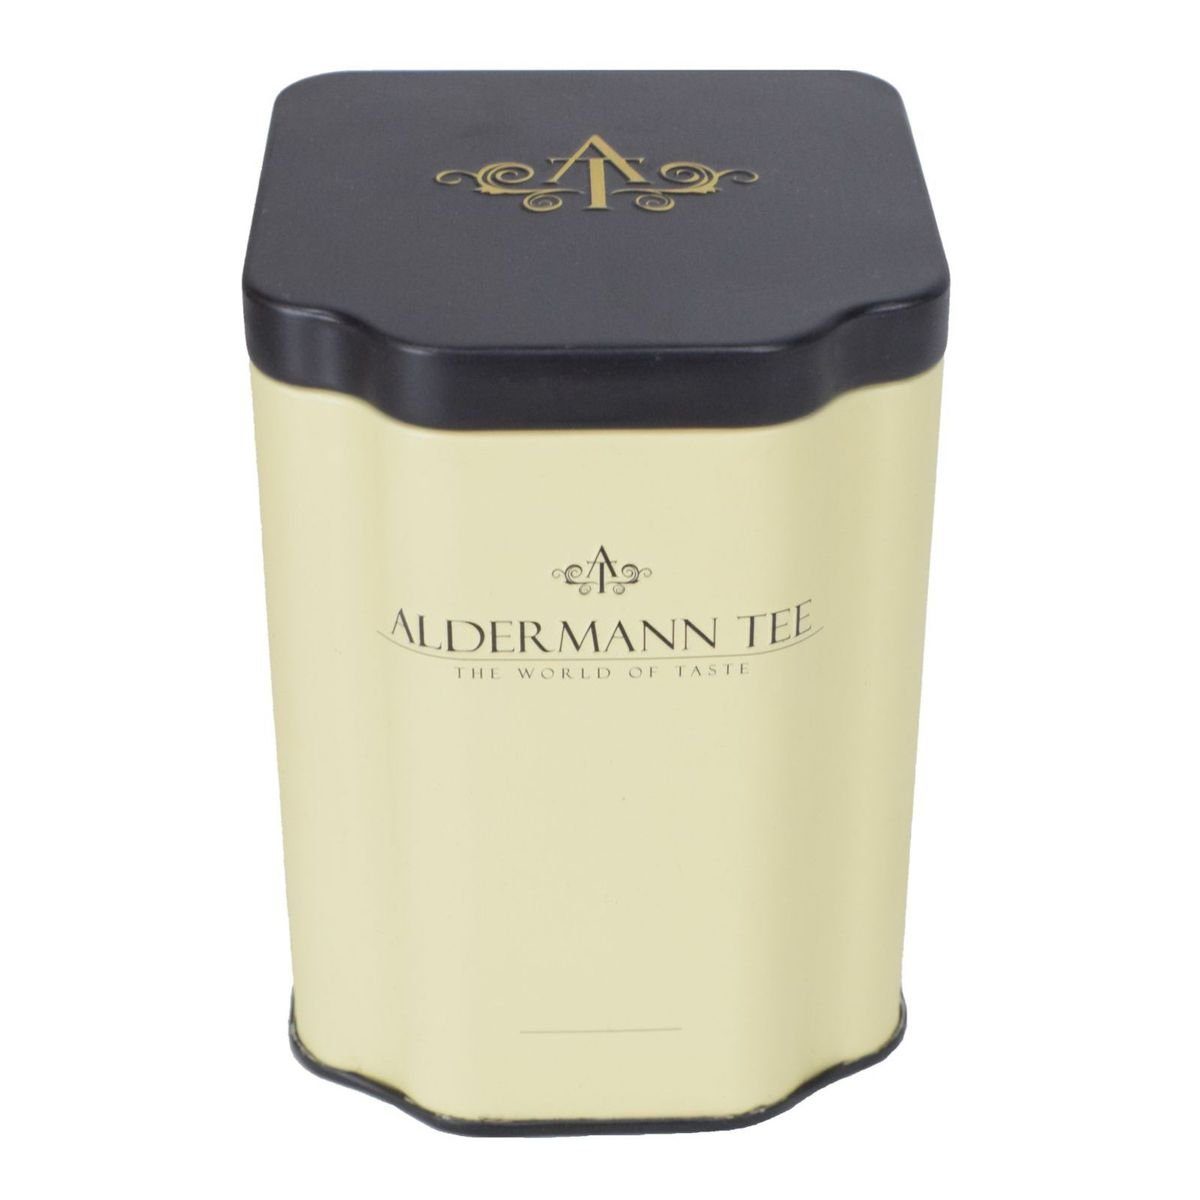 Top-Qualität Teebox "Aldermann cm Tee" Gewürze, Metall Teedose, Deckel, schwarzer 8x8x11